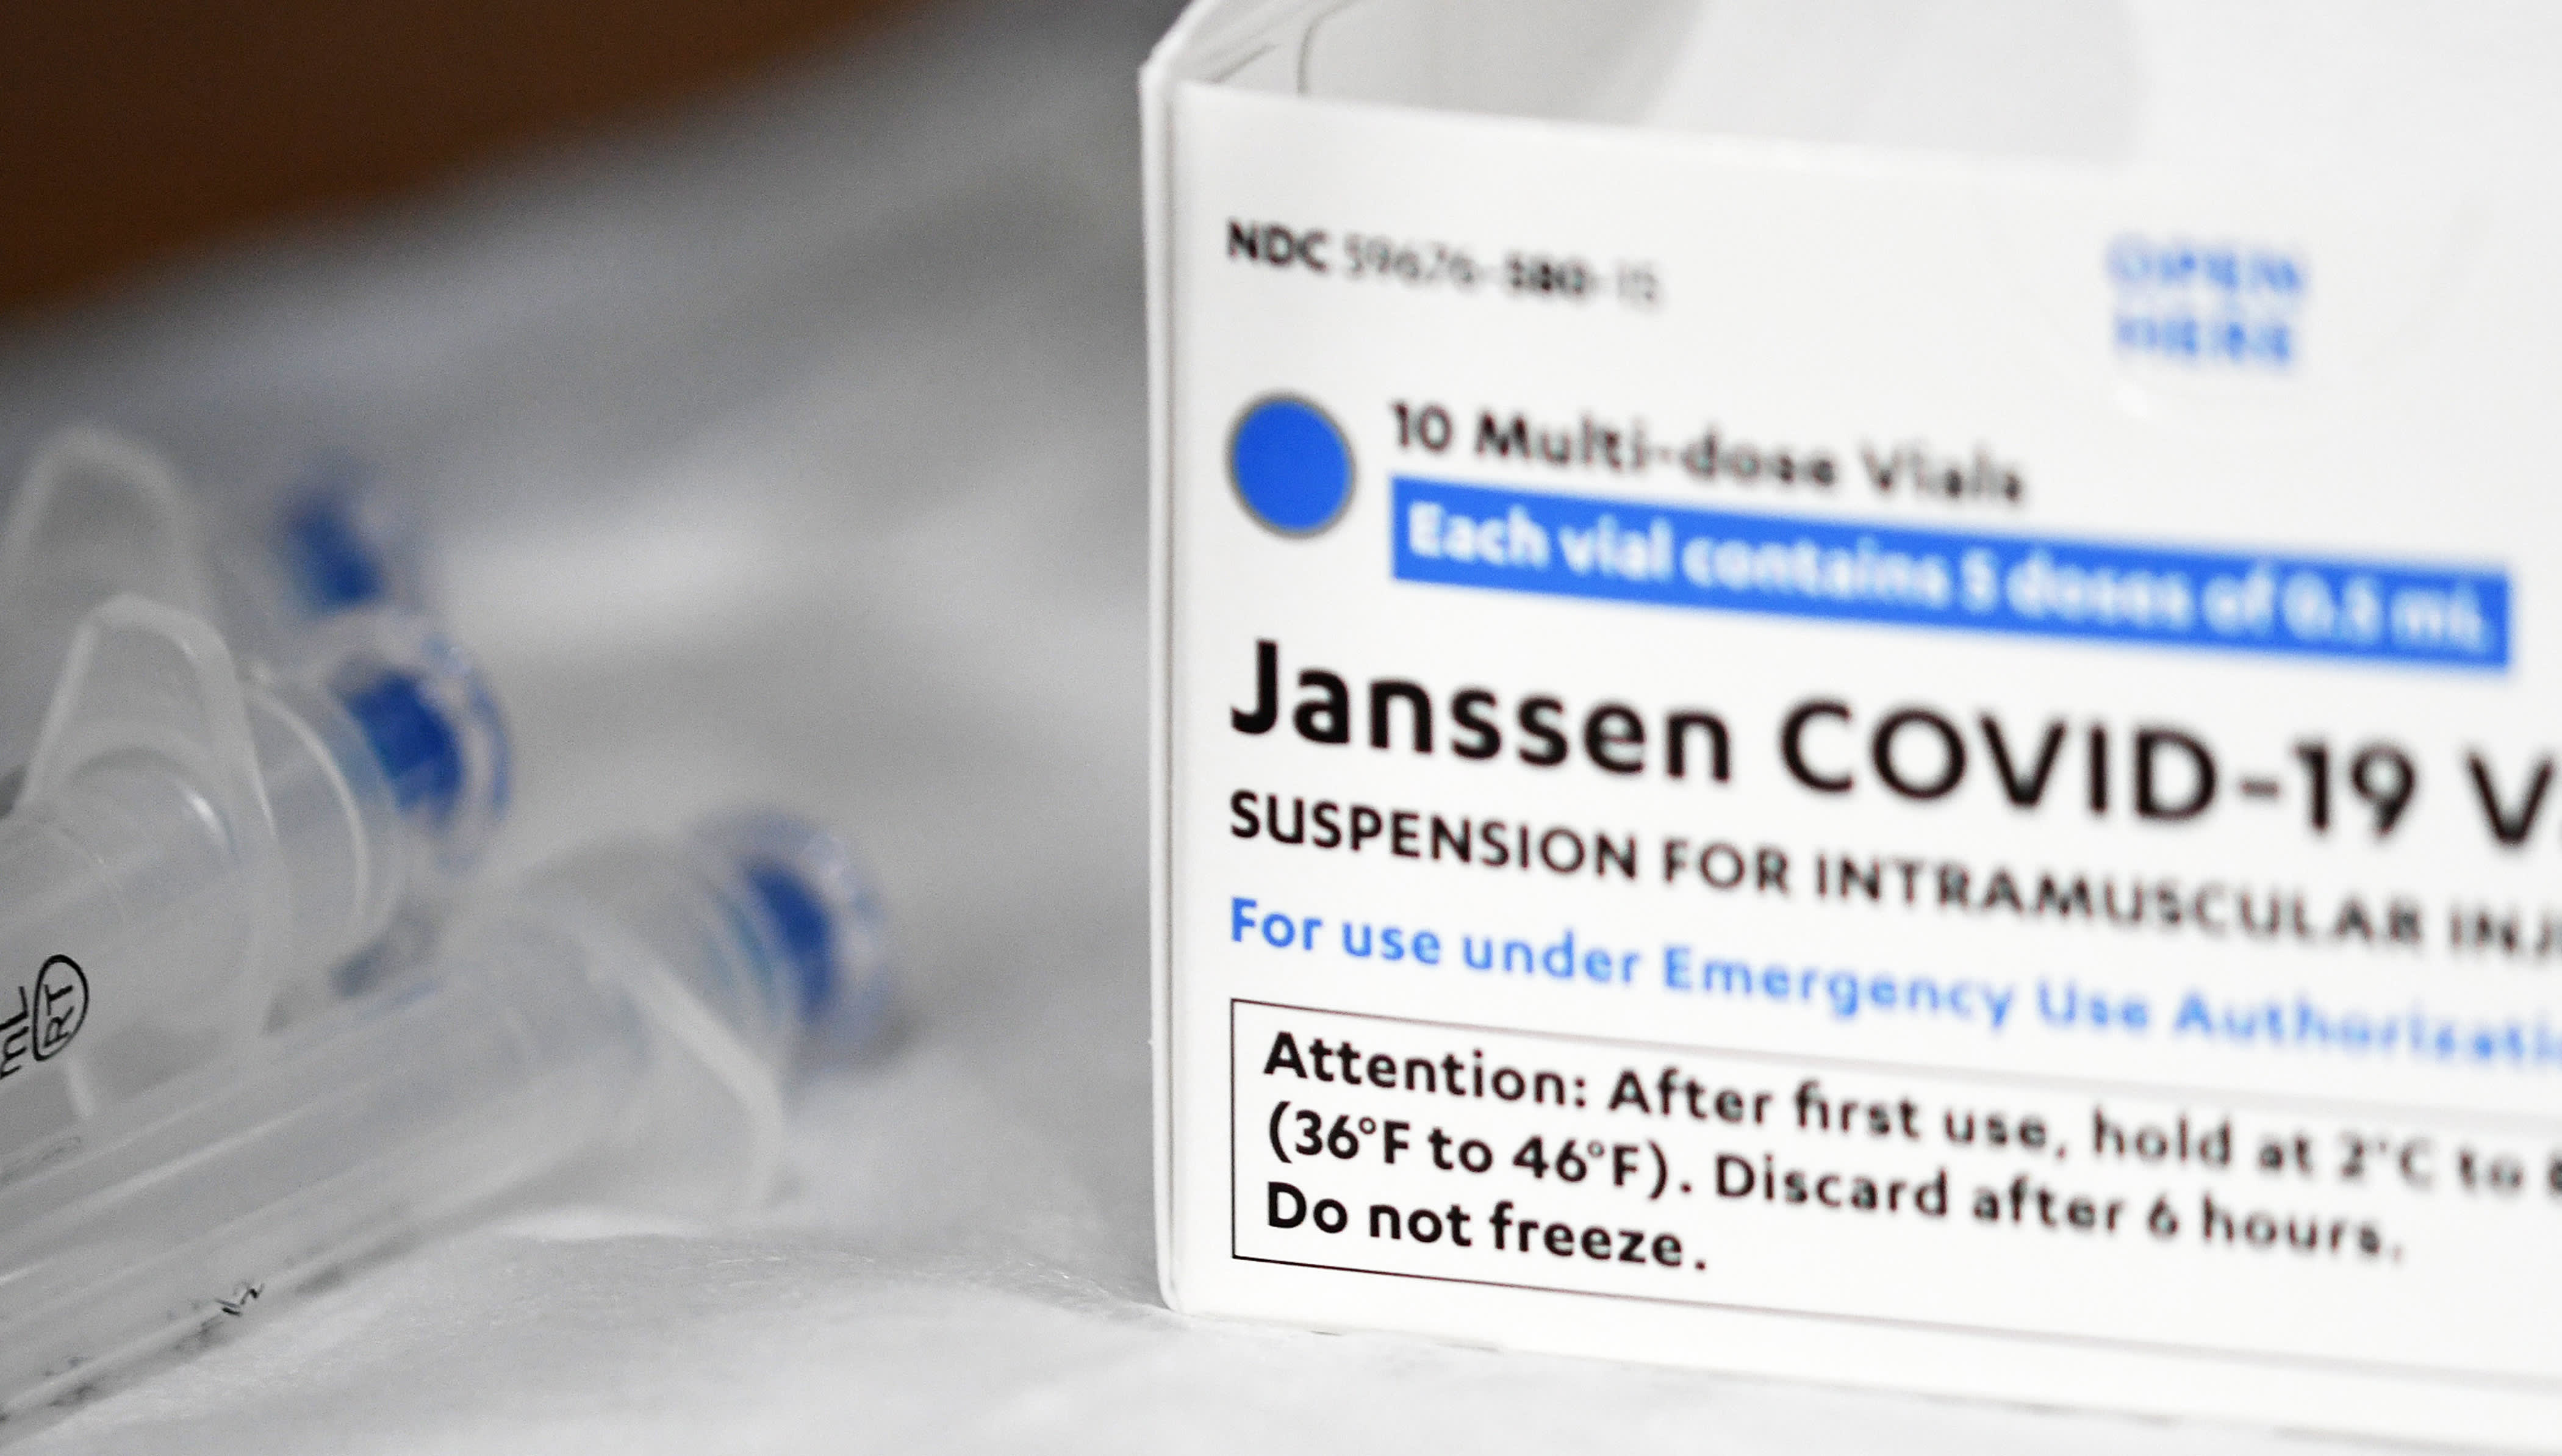 Johnson & Johnson plant breaks Covid vaccine production, report says